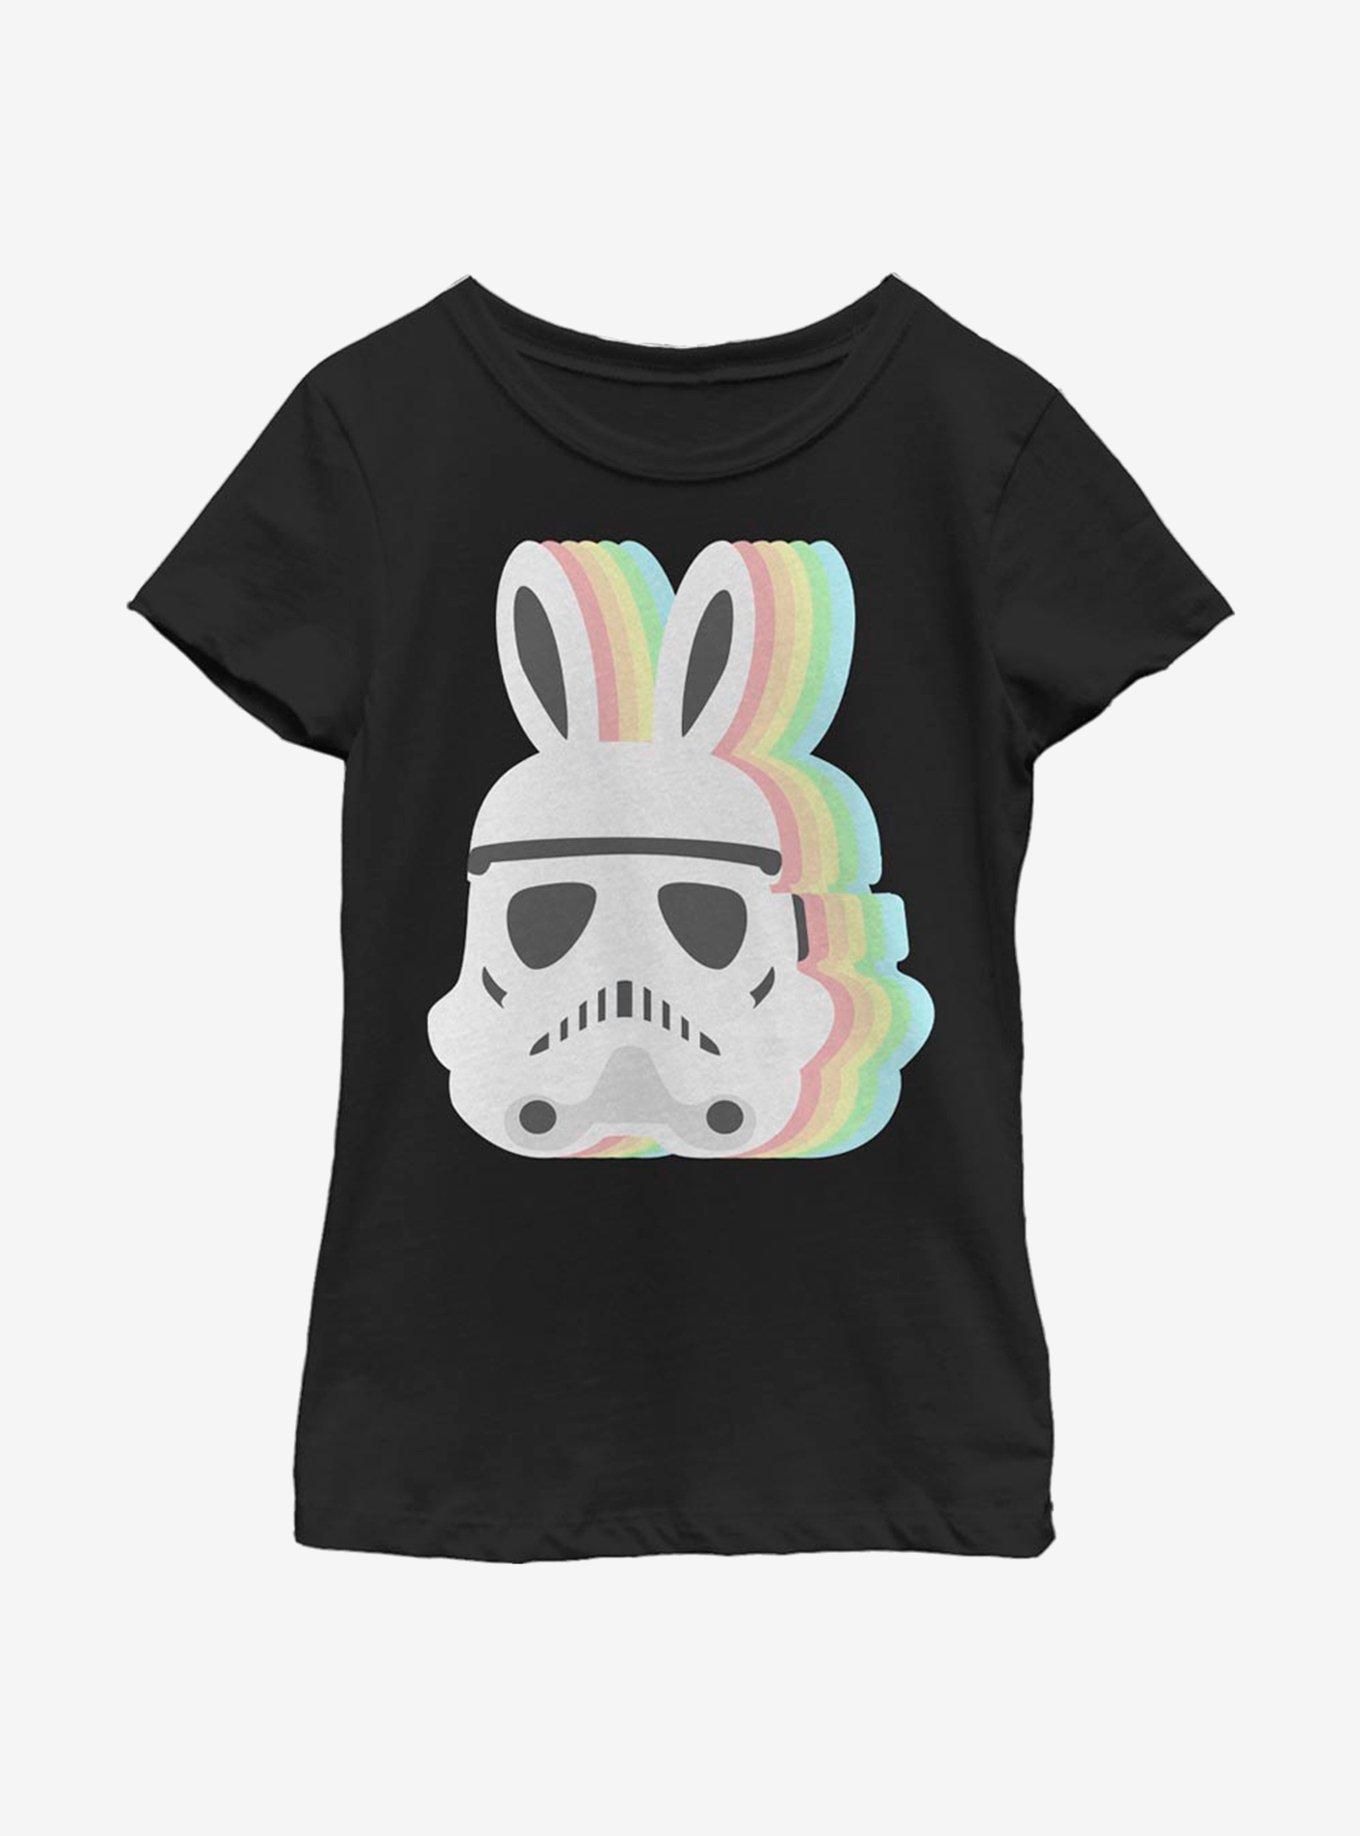 Star Wars Stormtrooper Bunny Youth Girls T-Shirt, BLACK, hi-res